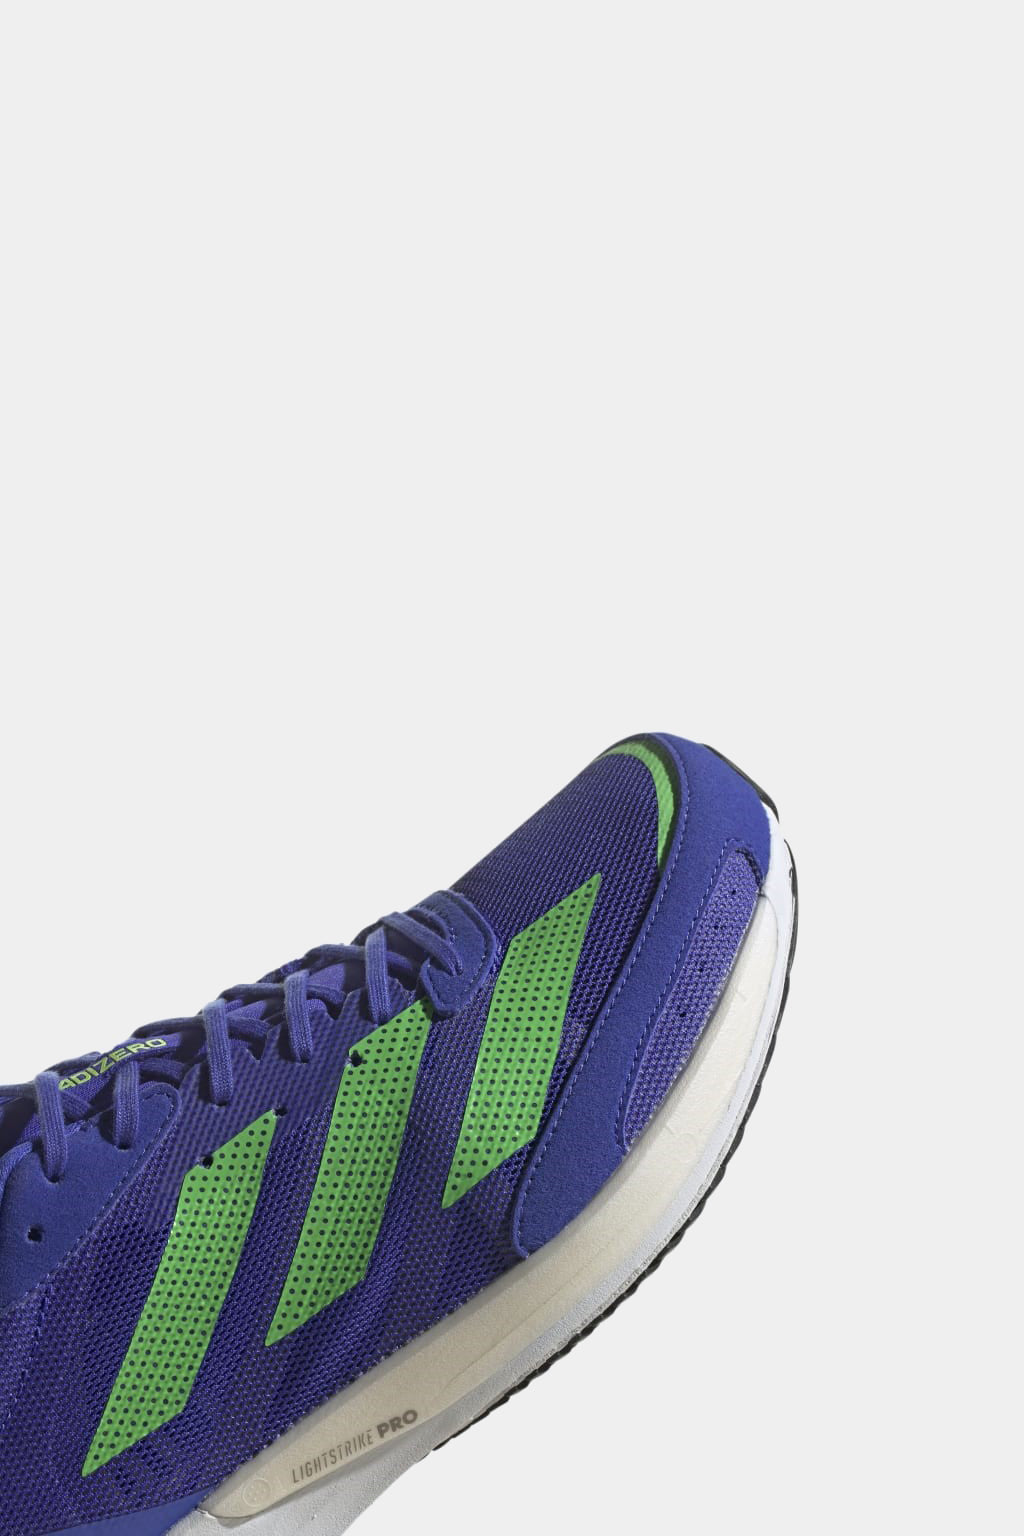 Adidas - Adizero Adios 6 Shoes